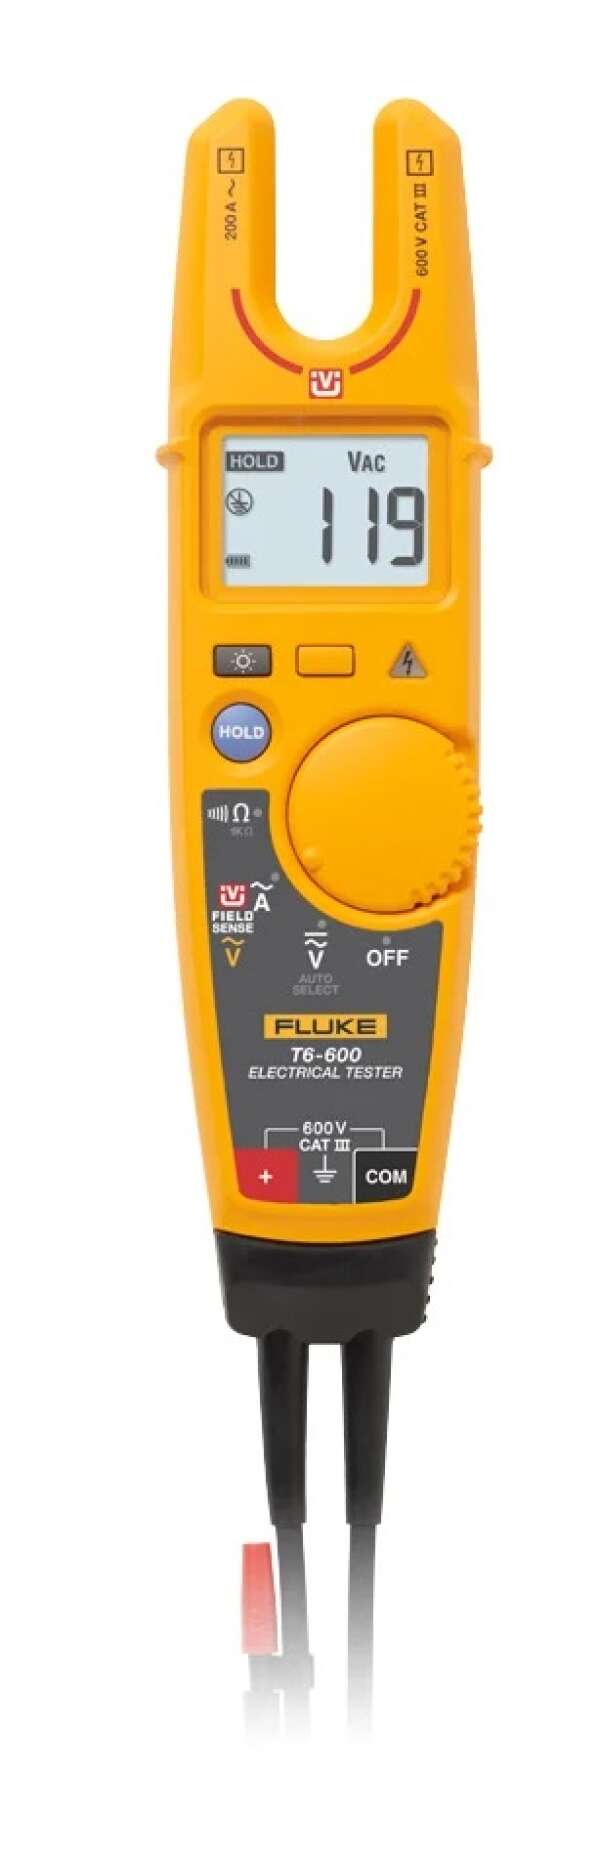 Fluke T6-600/EU - тестер электрооборудования